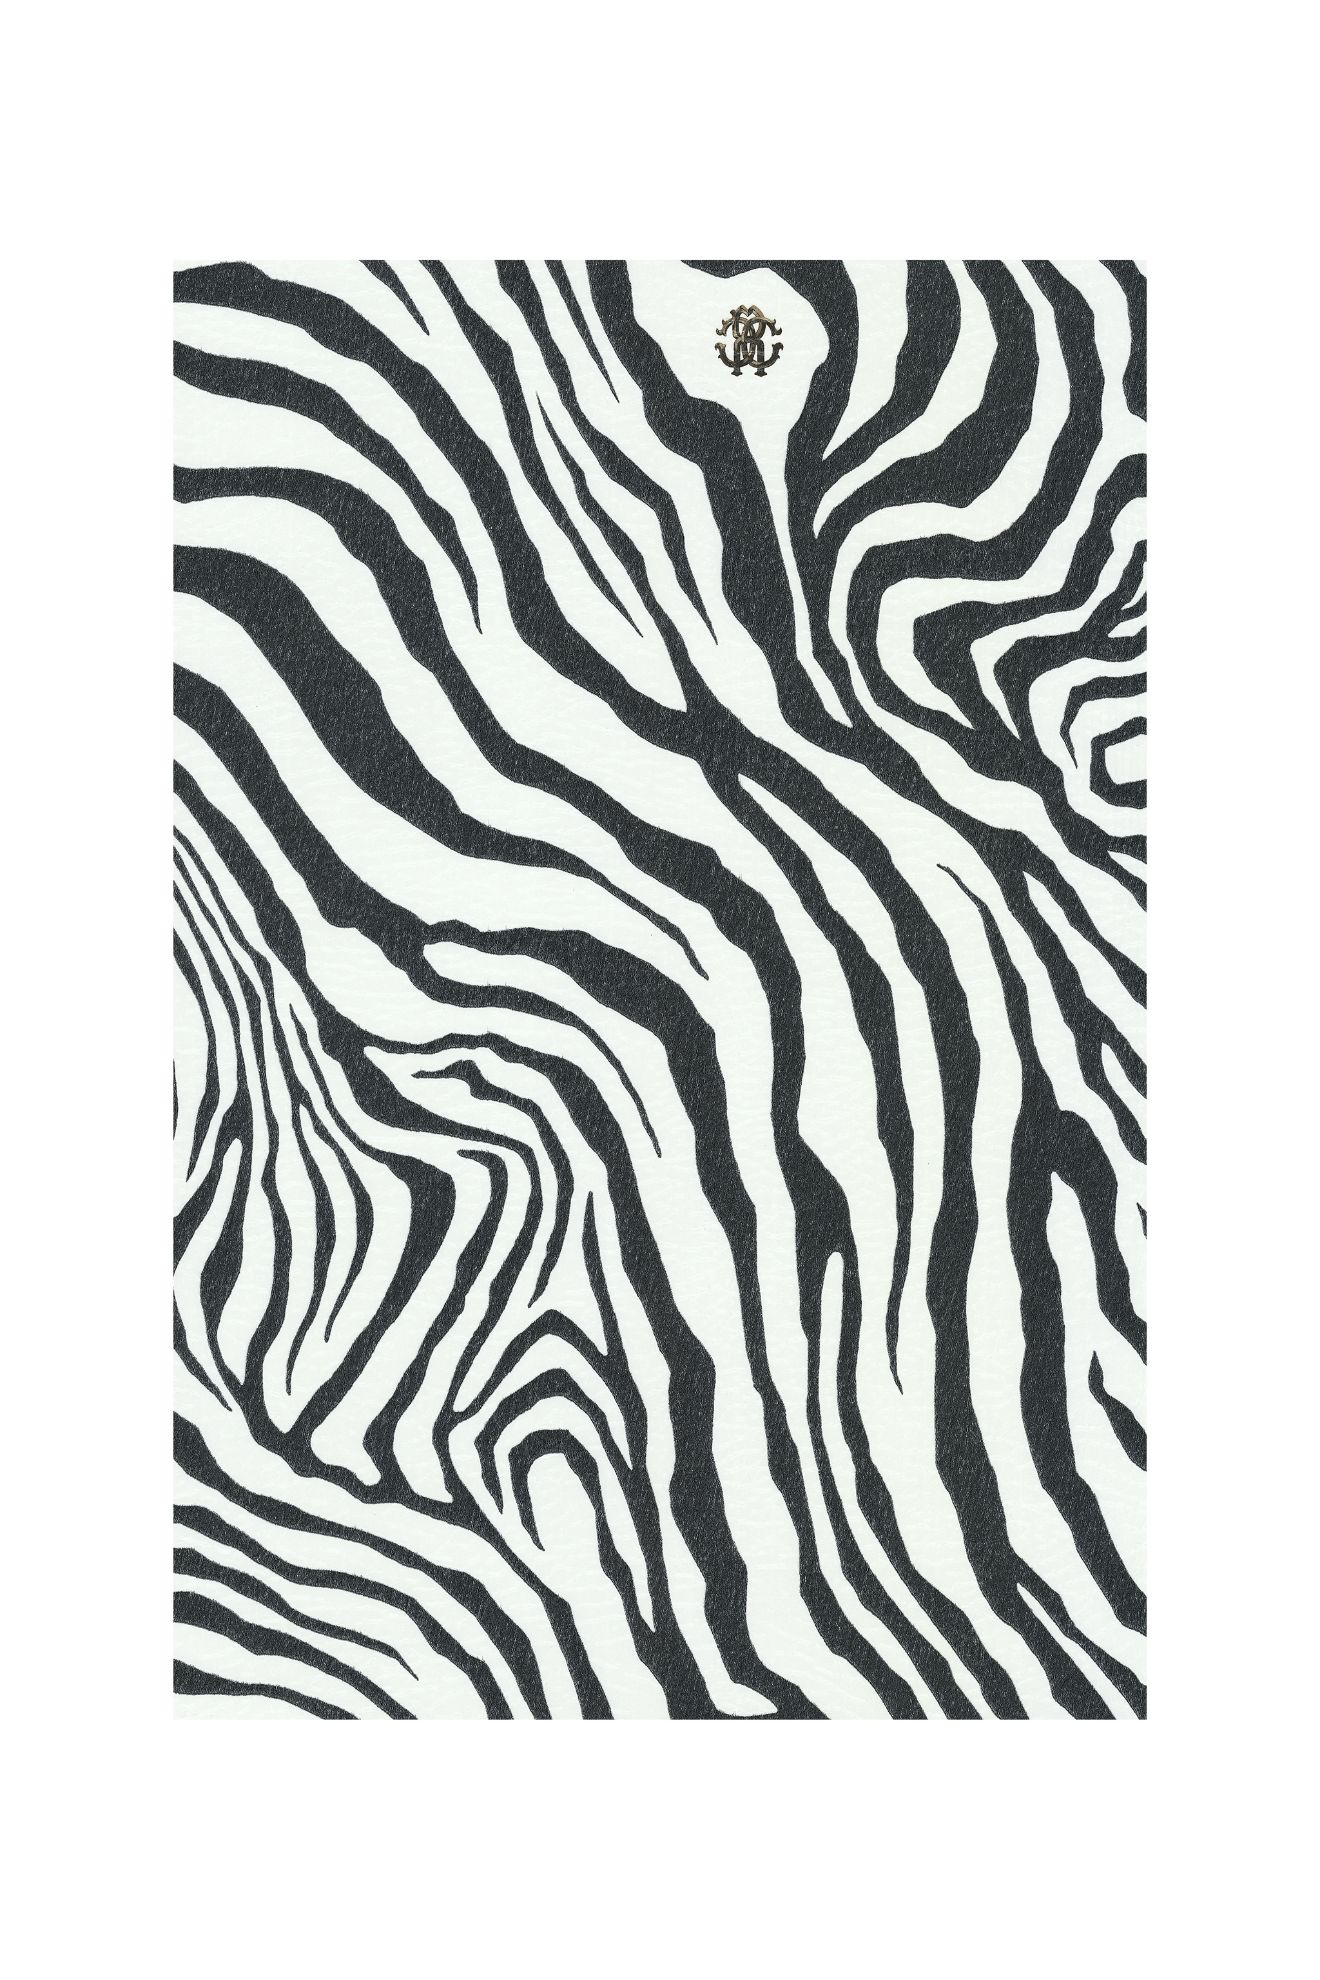 Zebra printed wallpaper. Roberto Cavalli Wallpaper